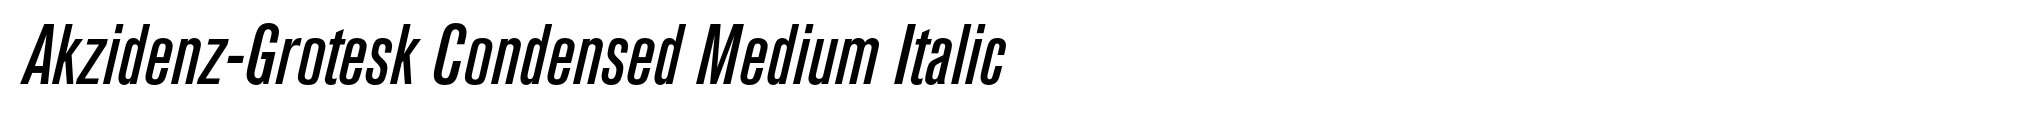 Akzidenz-Grotesk Condensed Medium Italic image